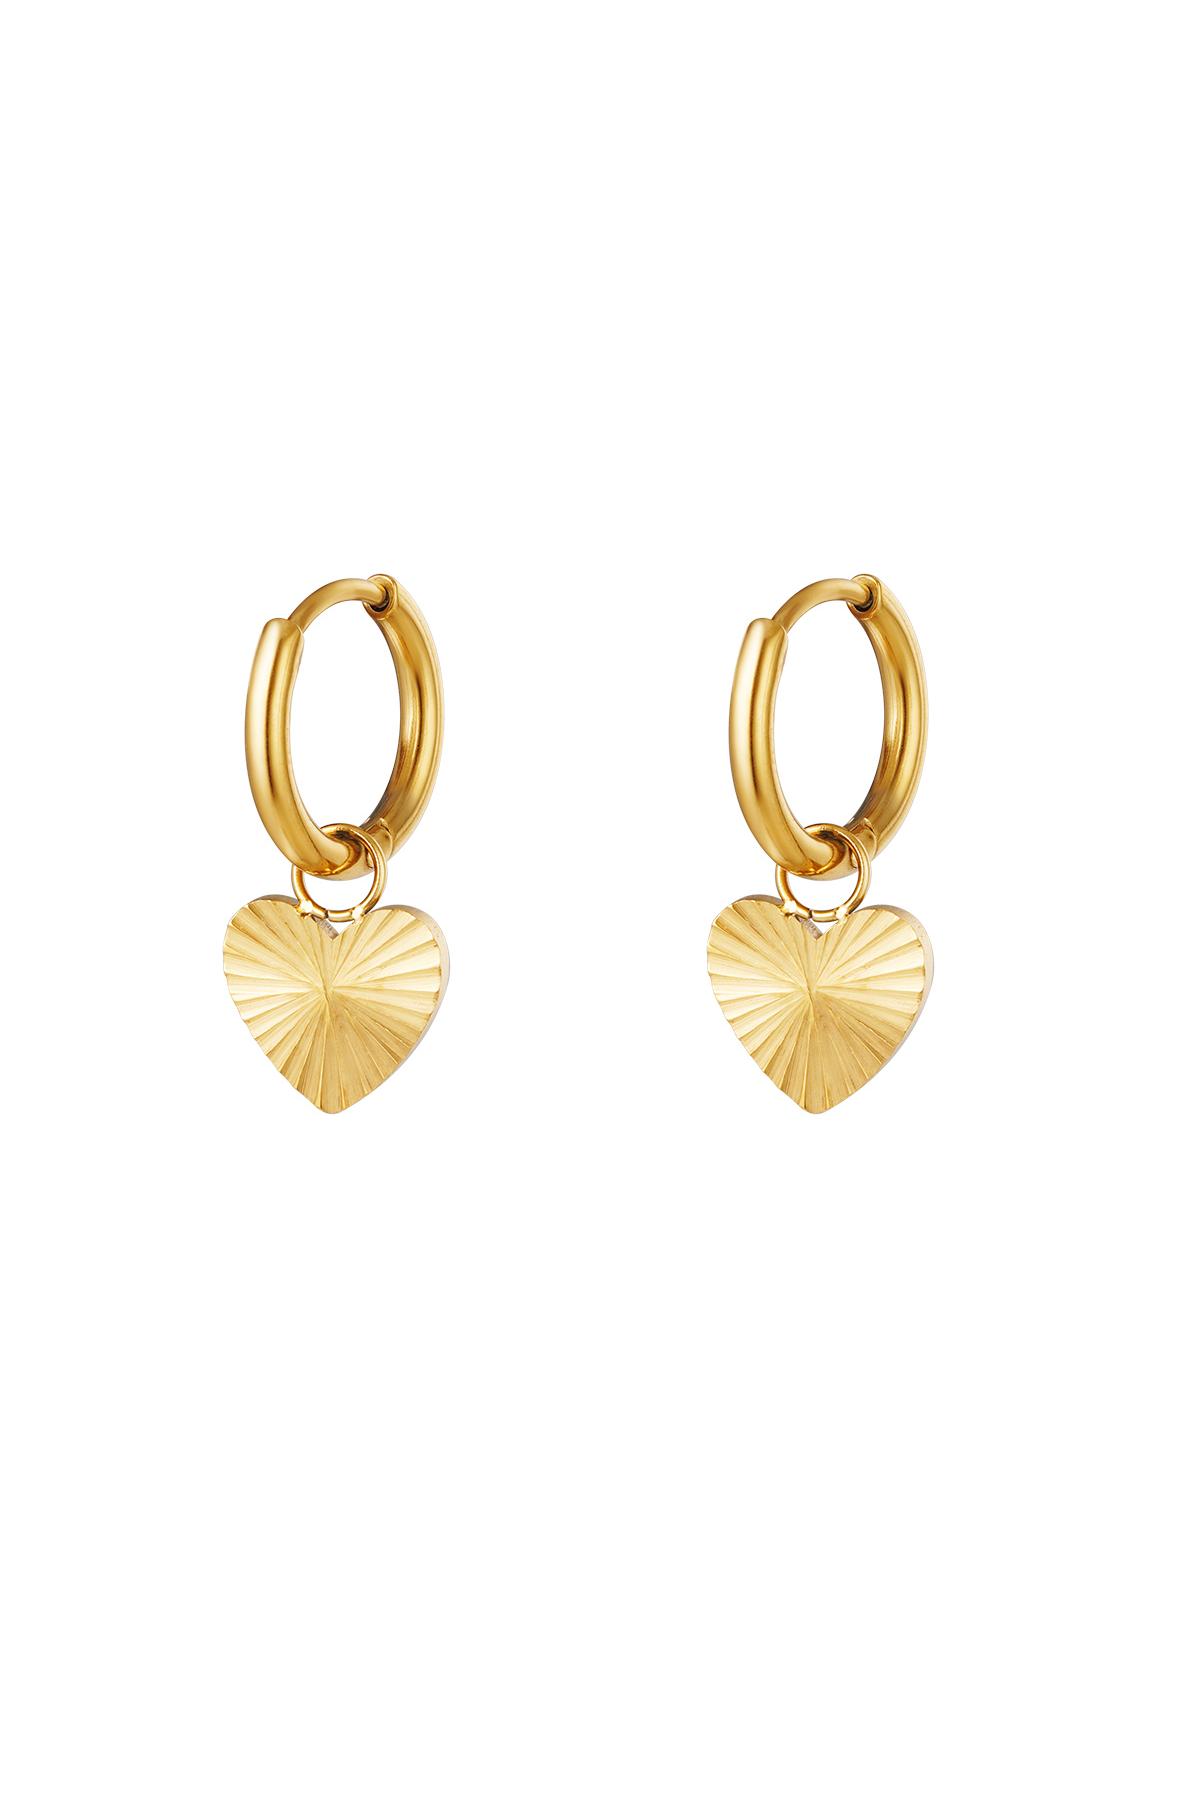 Gold / Stainles steel earrings heart Gold Stainless Steel 